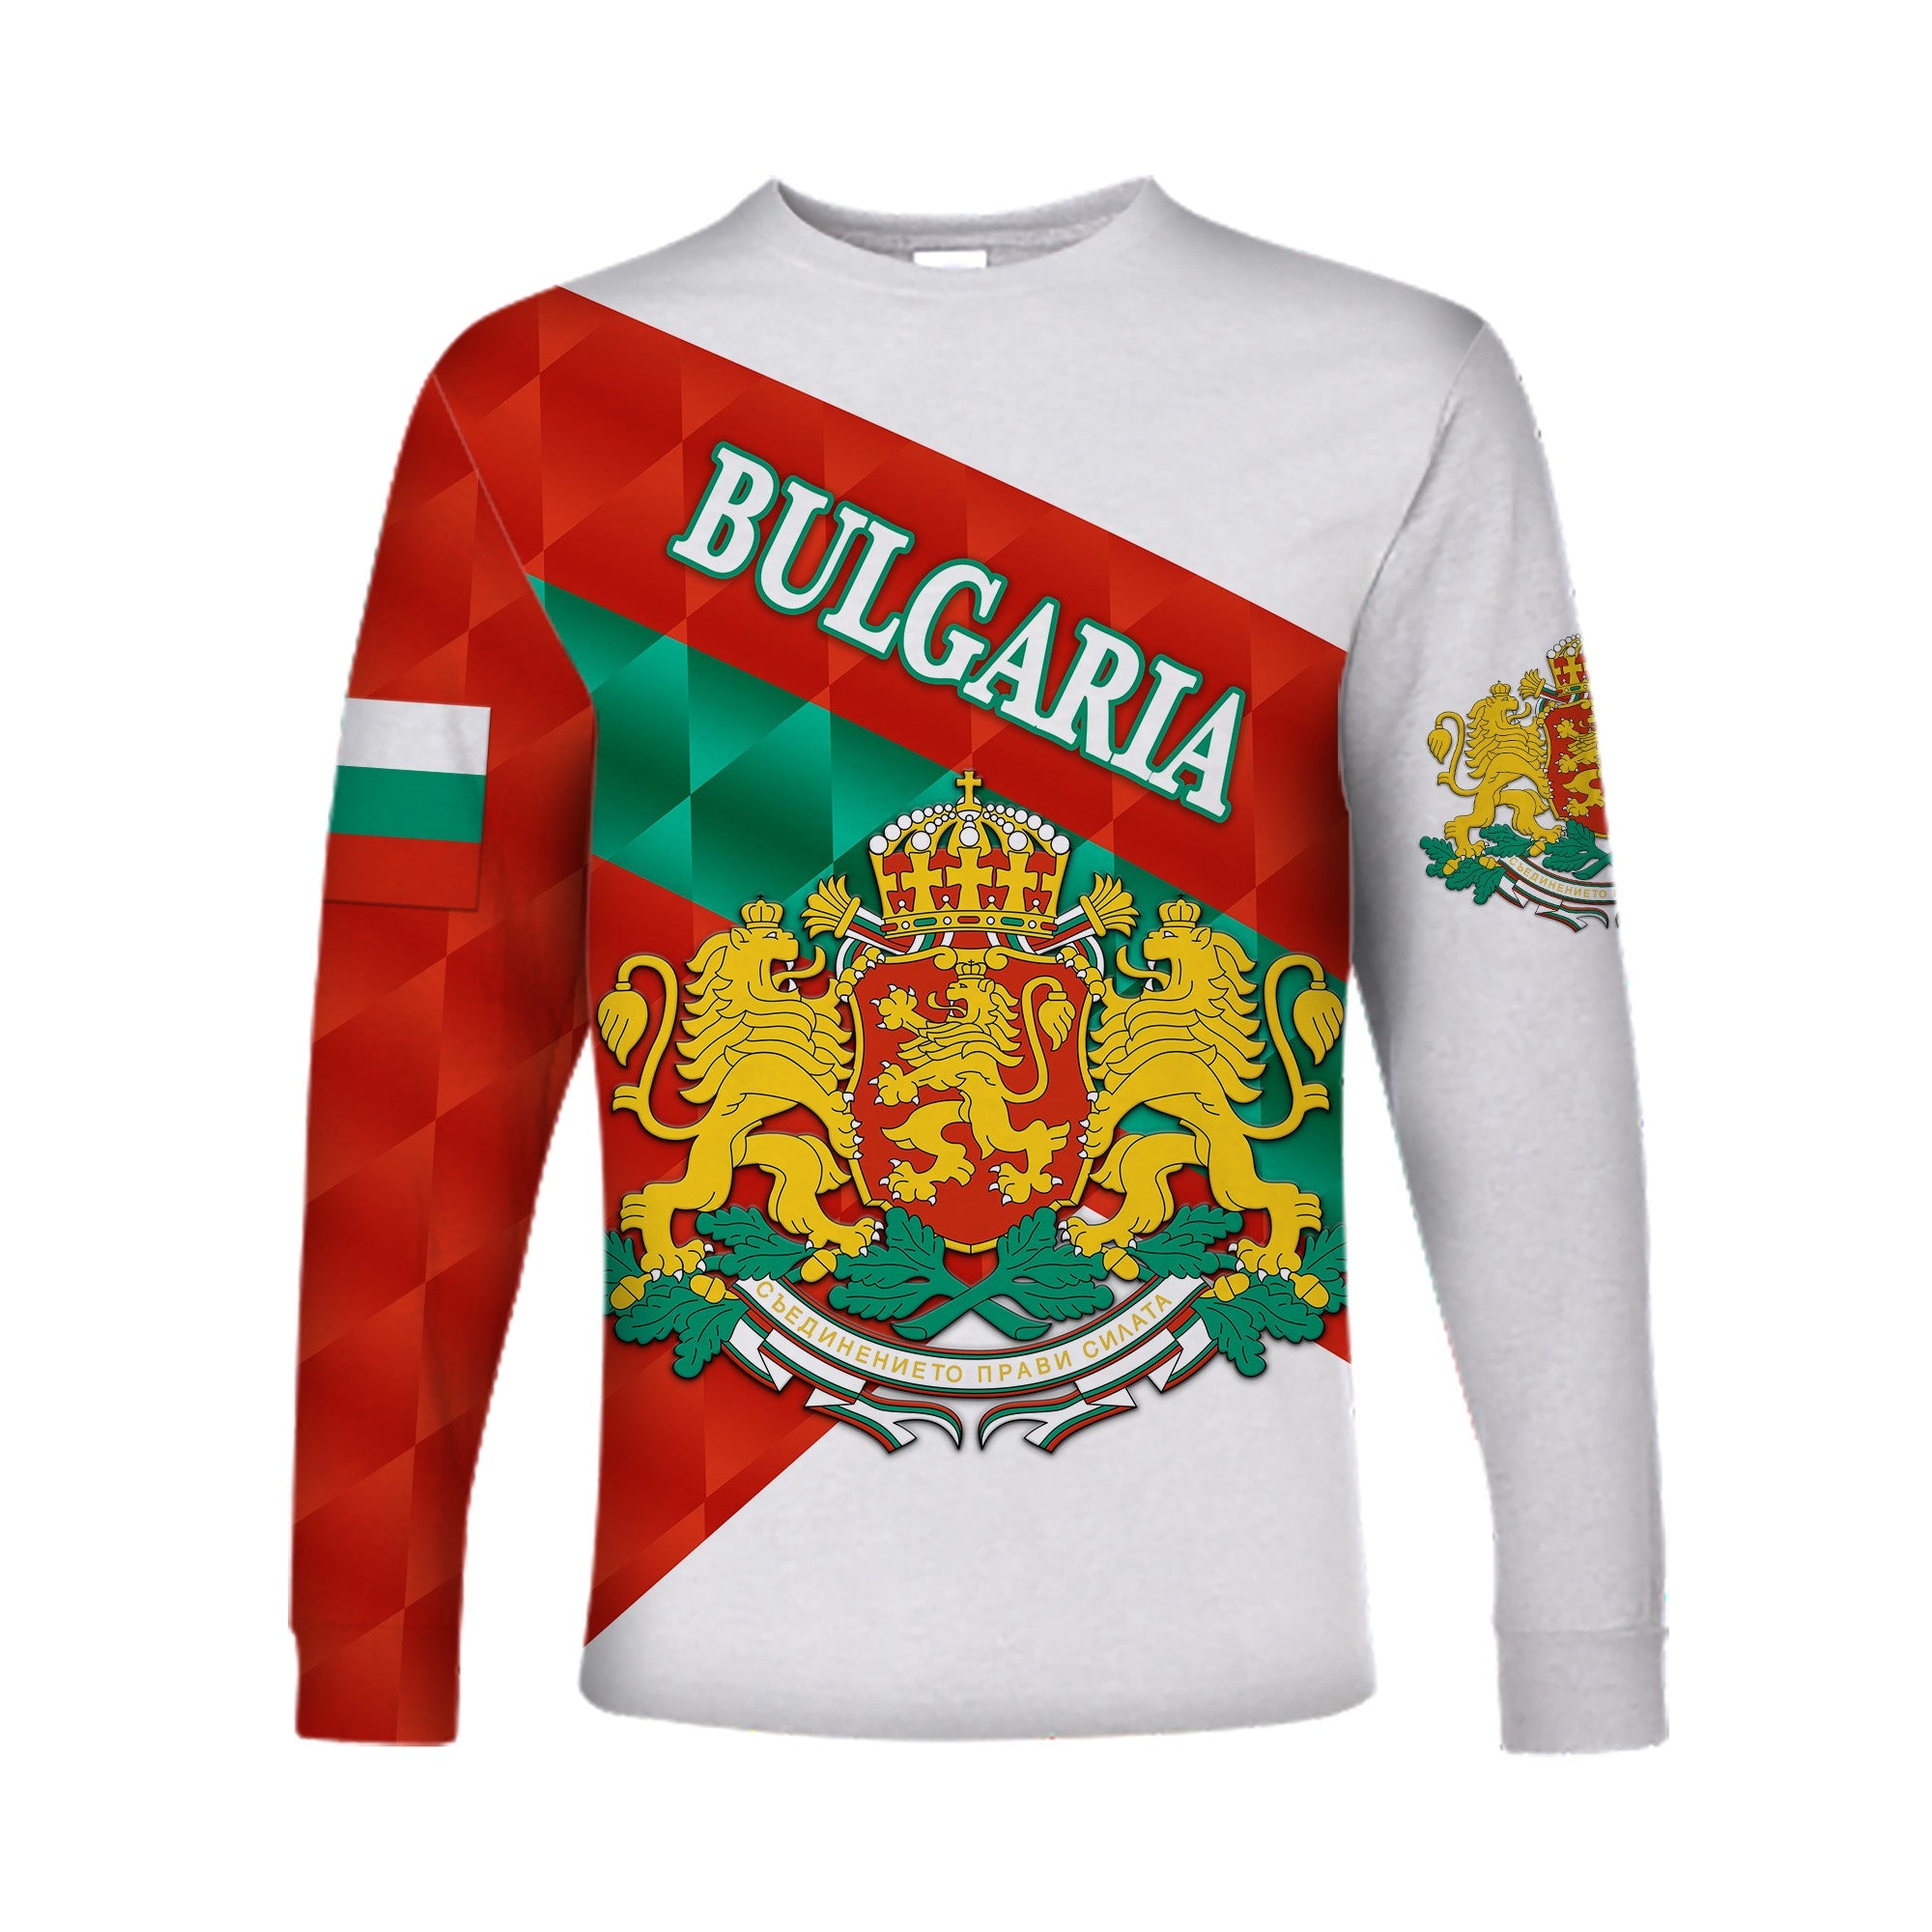 bulgaria-long-sleeve-shirt-sporty-style